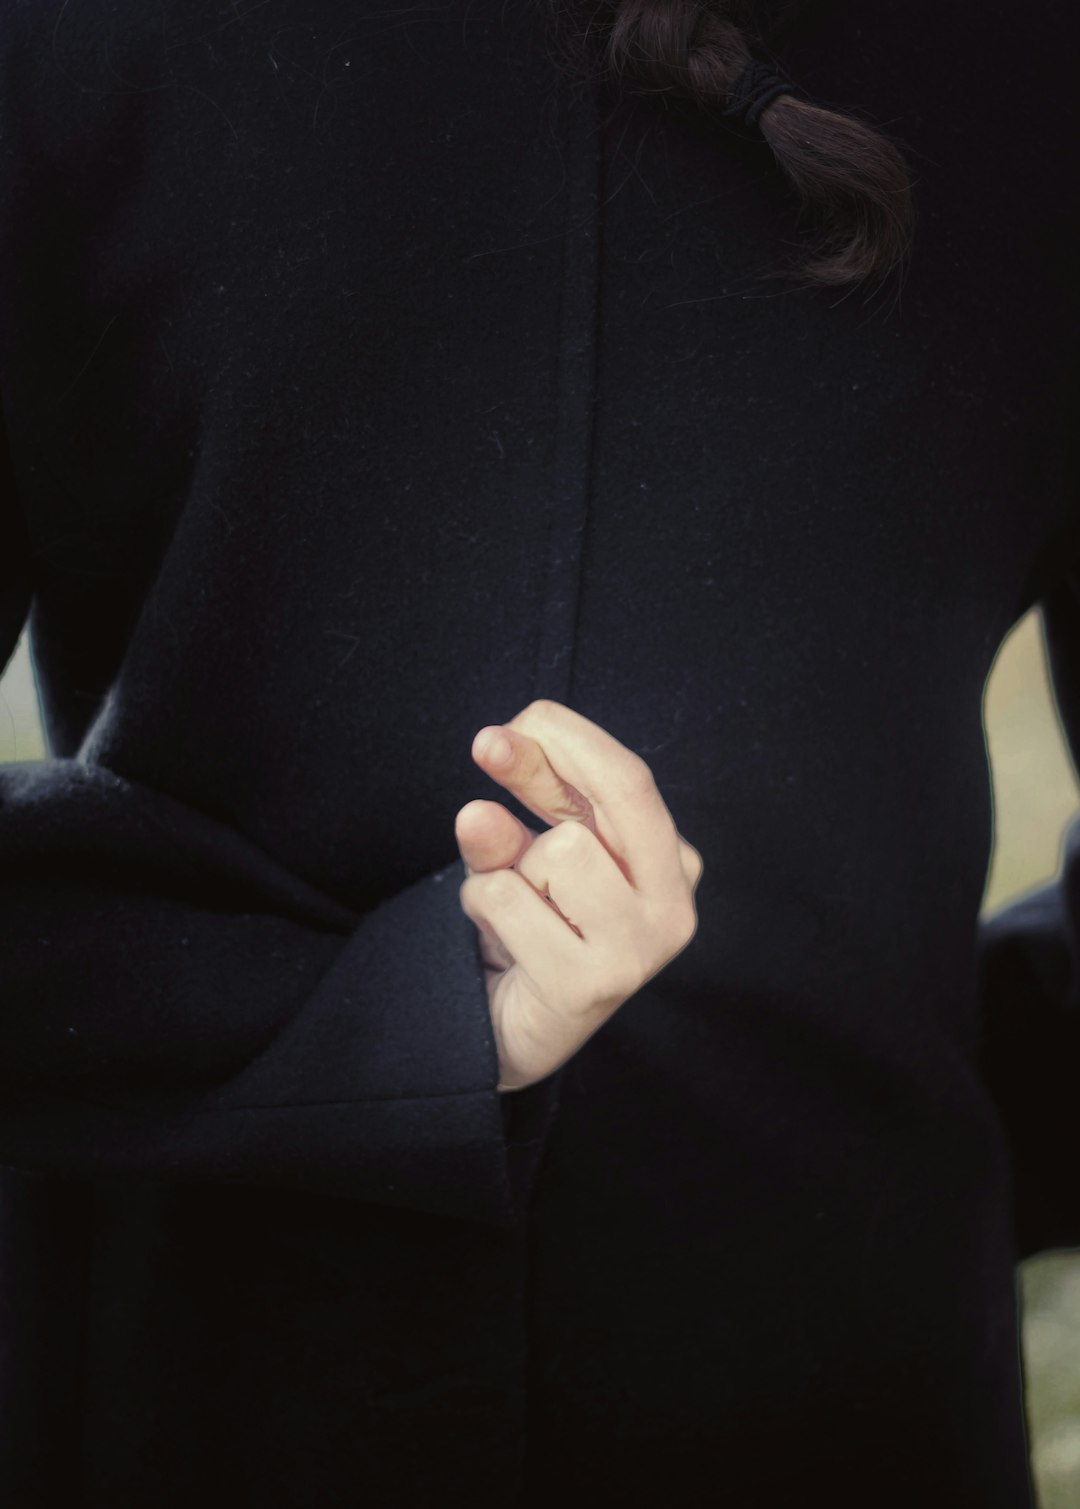 woman in black long sleeve shirt